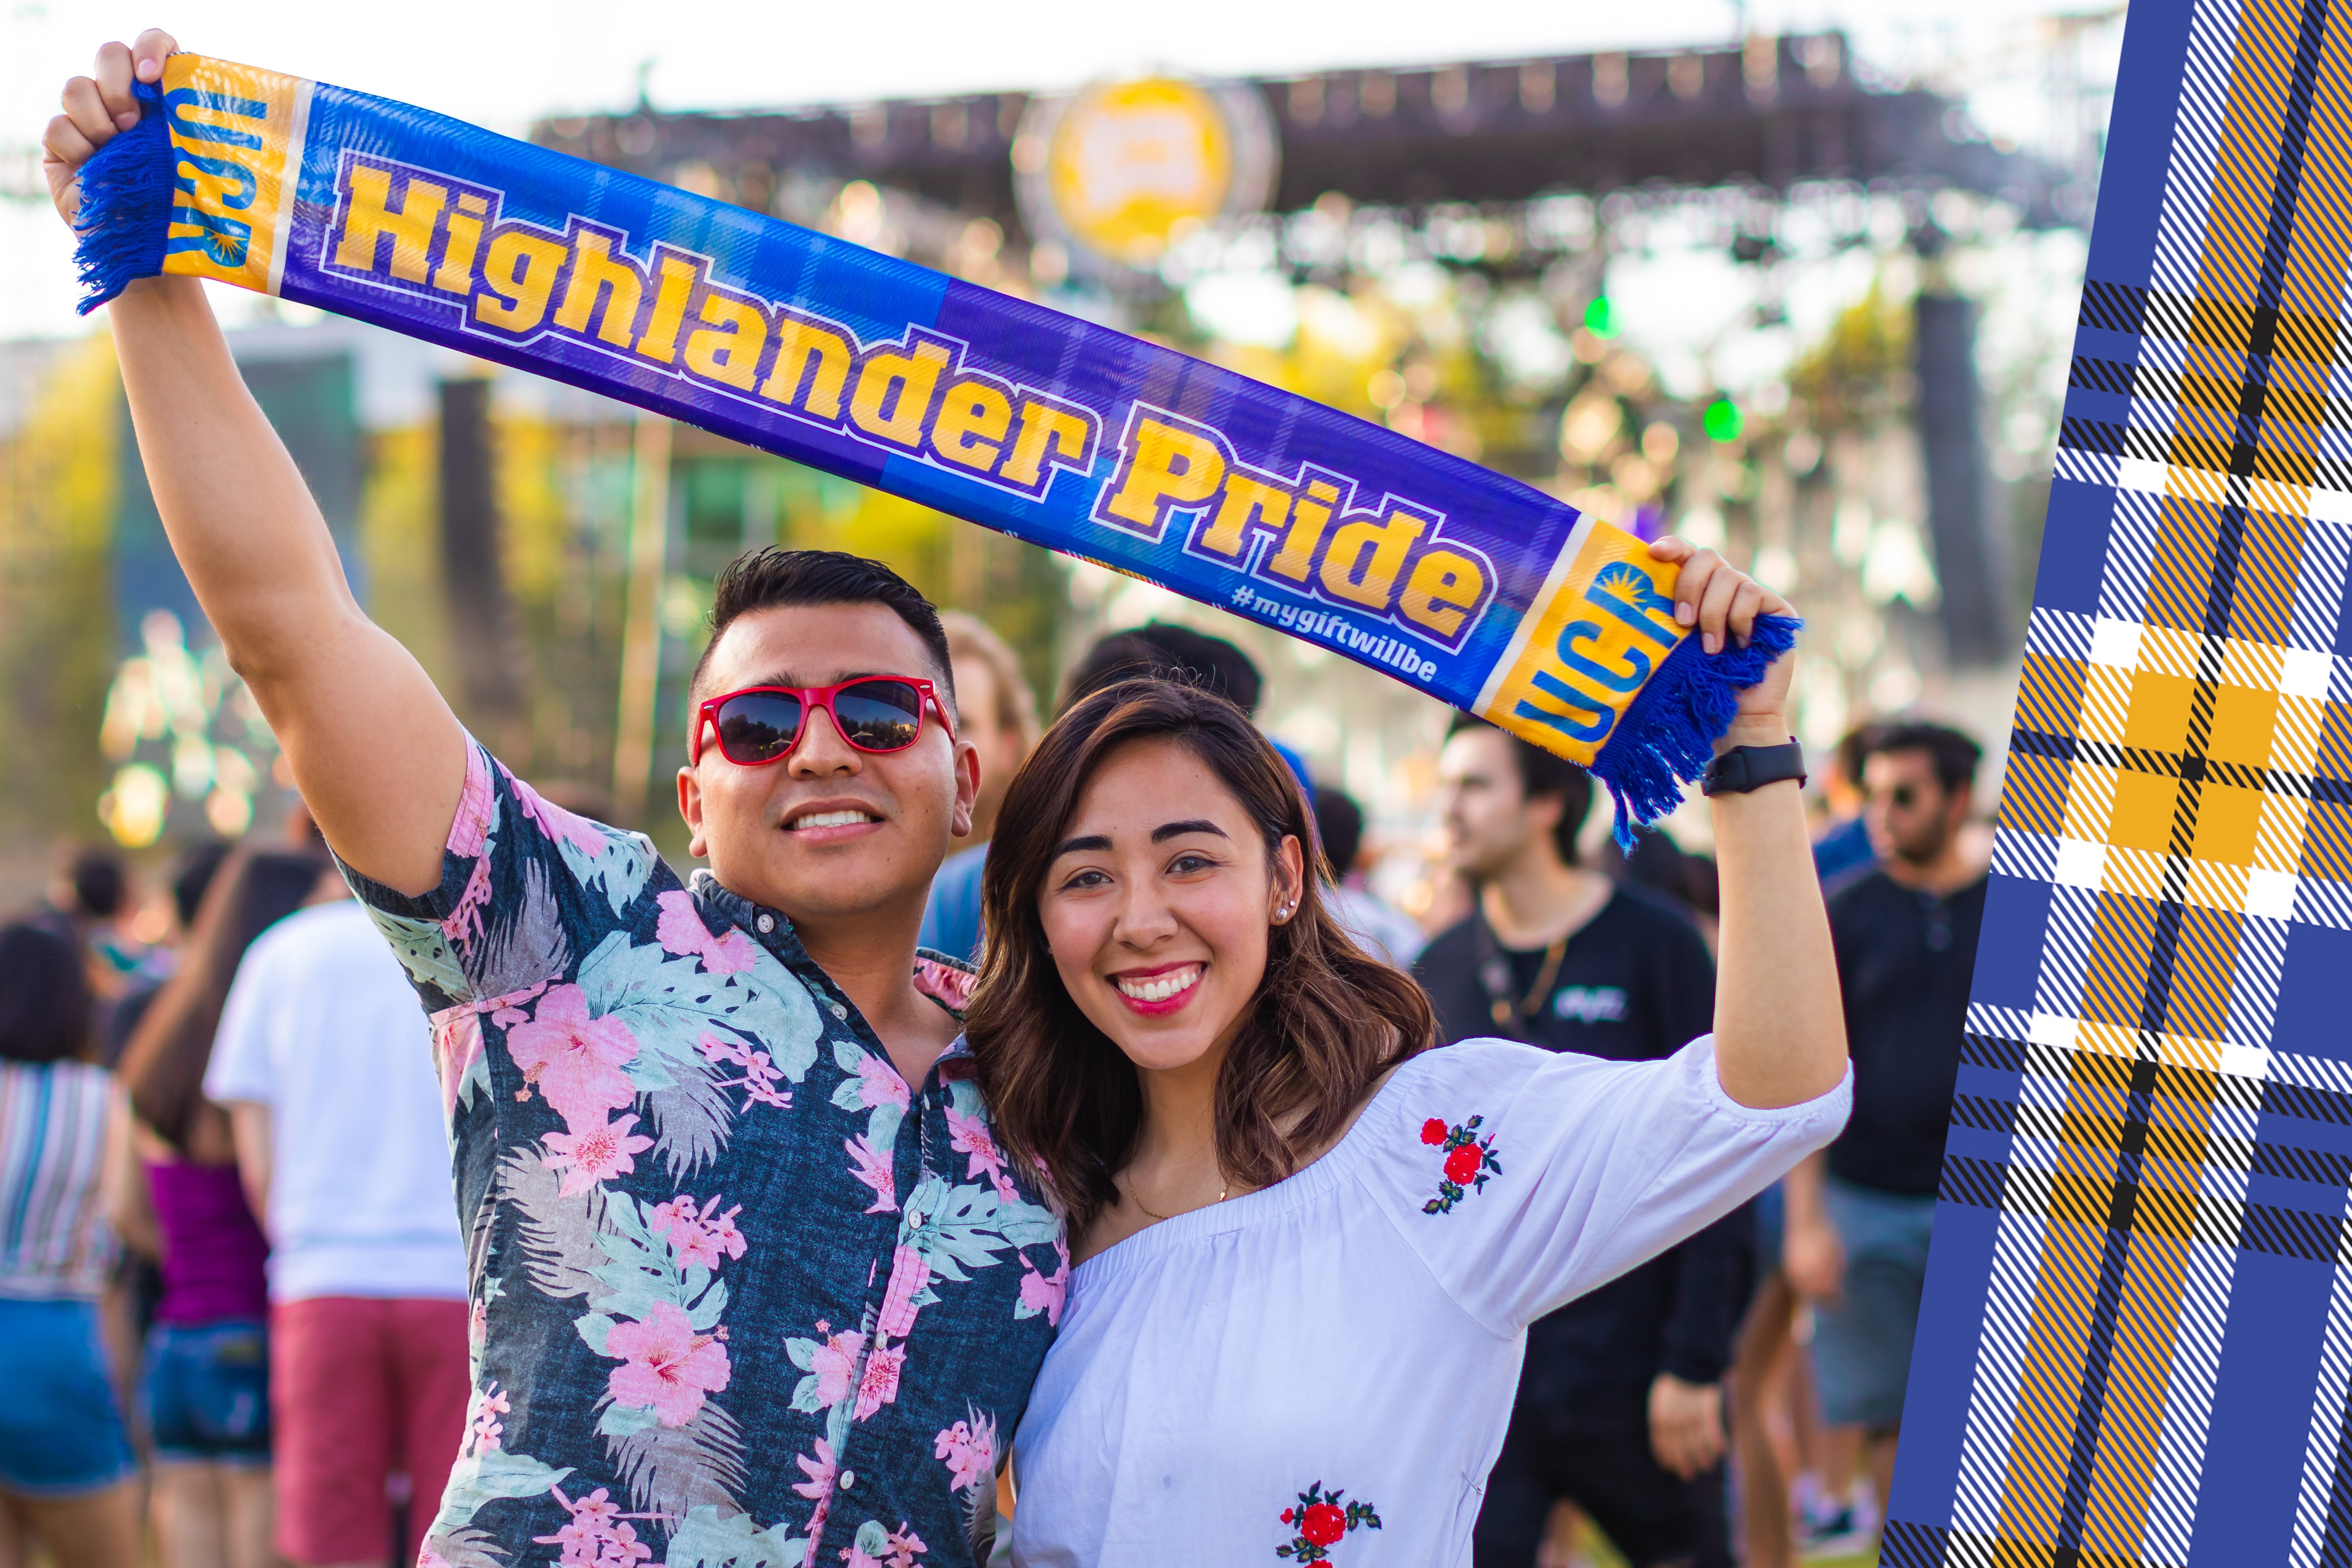 UCR alumni holding "Highlander Pride" scarf at campus music festival.